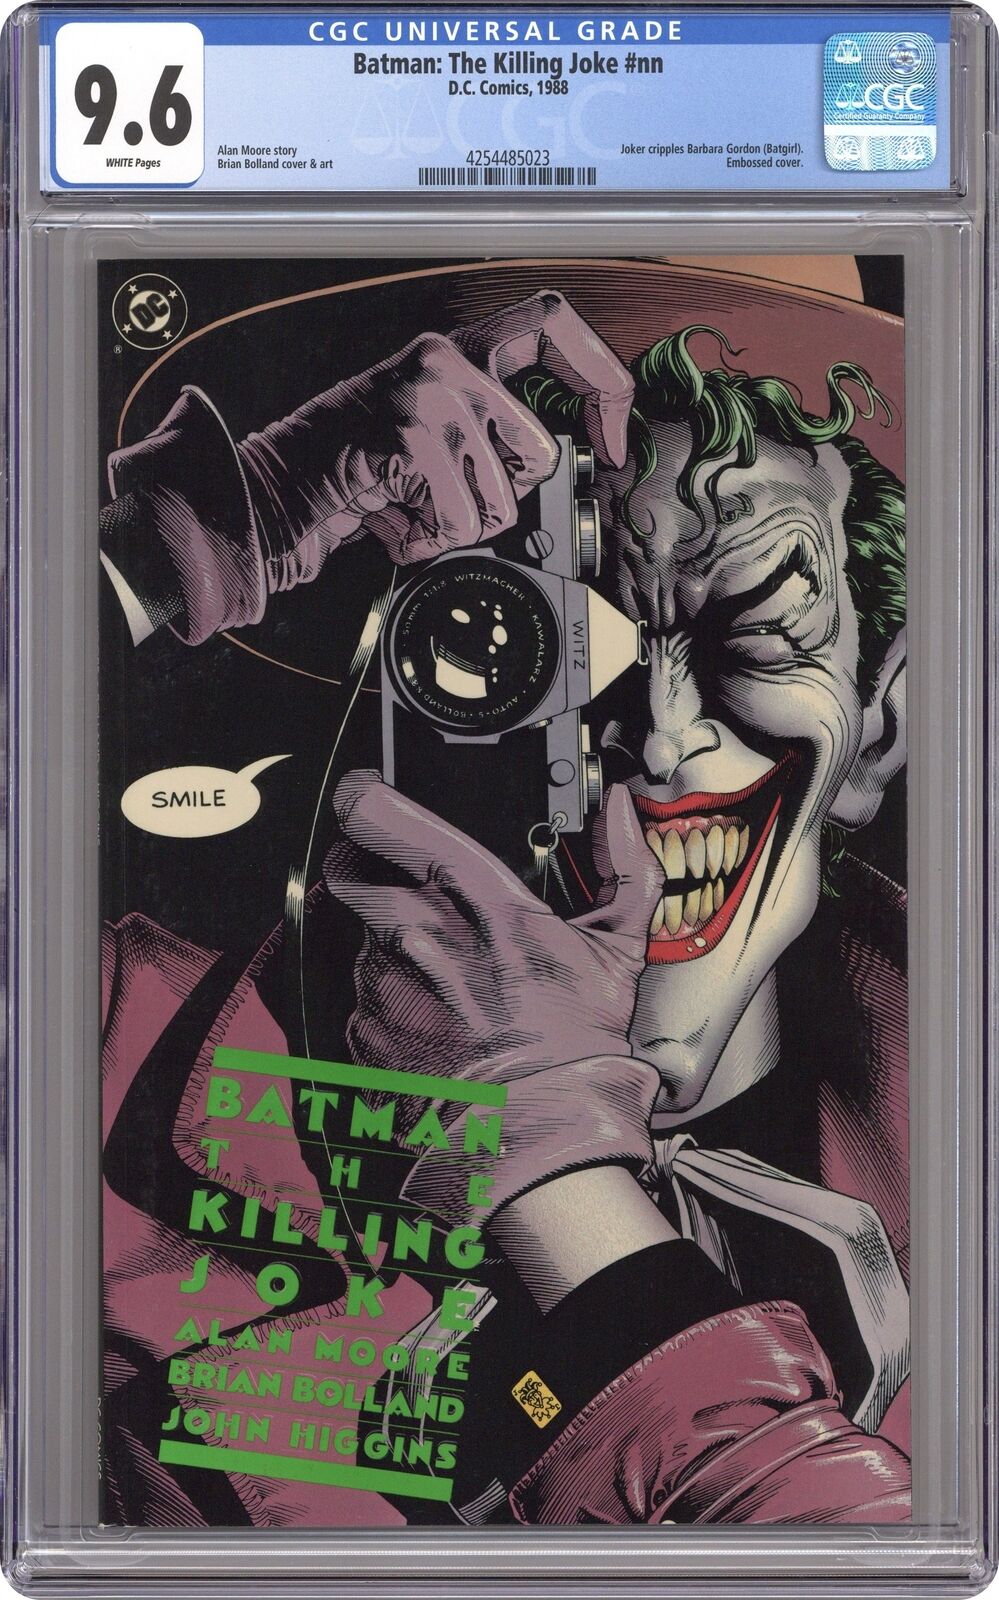 Batman The Killing Joke #1 Bolland Variant 1st Printing CGC 9.6 1988 4254485023